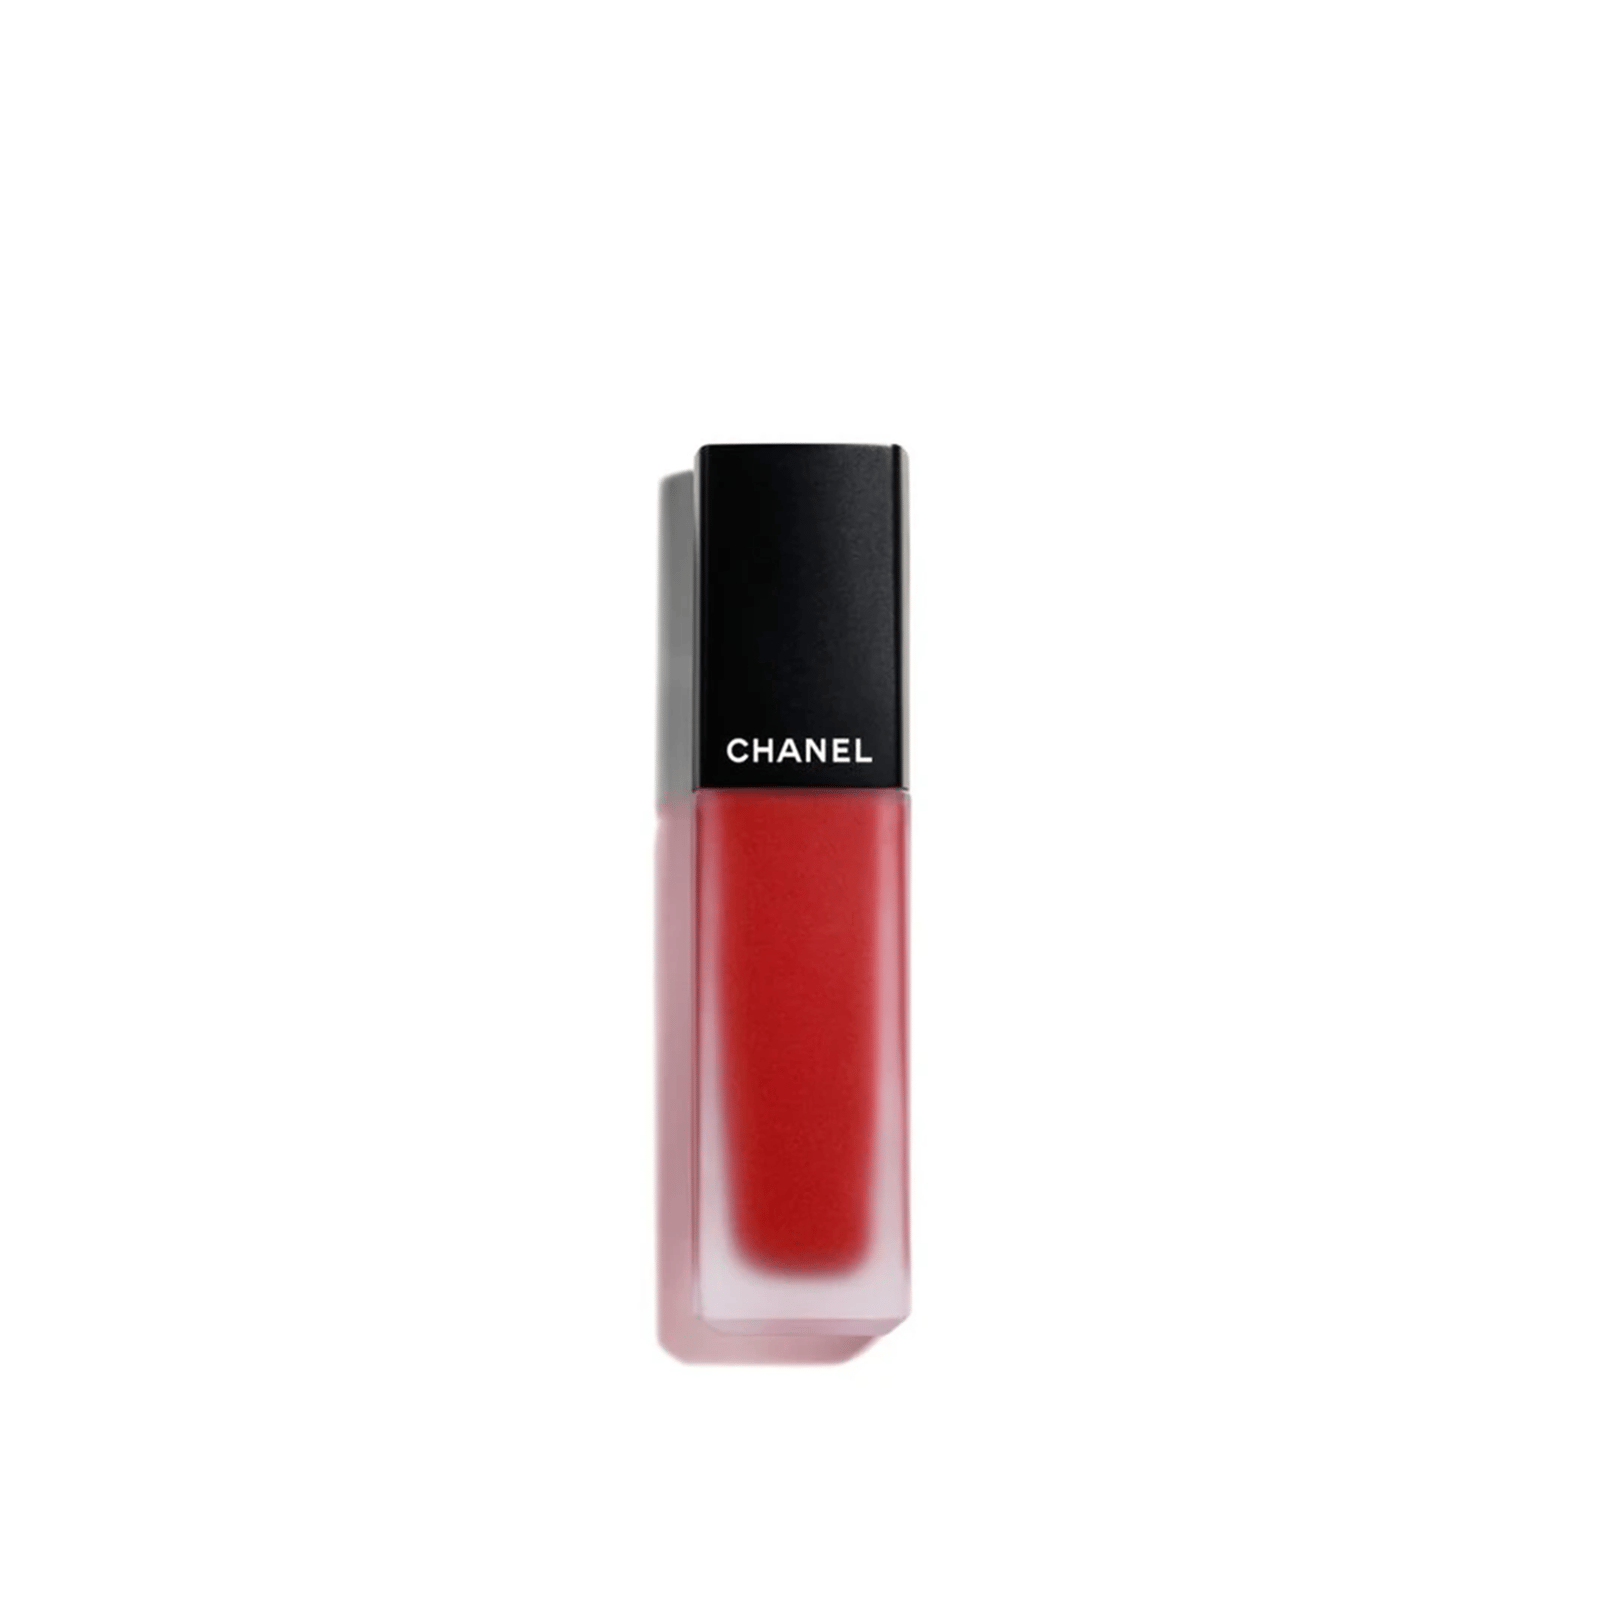 CHANEL Rouge Allure Ink Fusion Intense Matte Liquid Lip Colour 822 Deep Pink 6ml